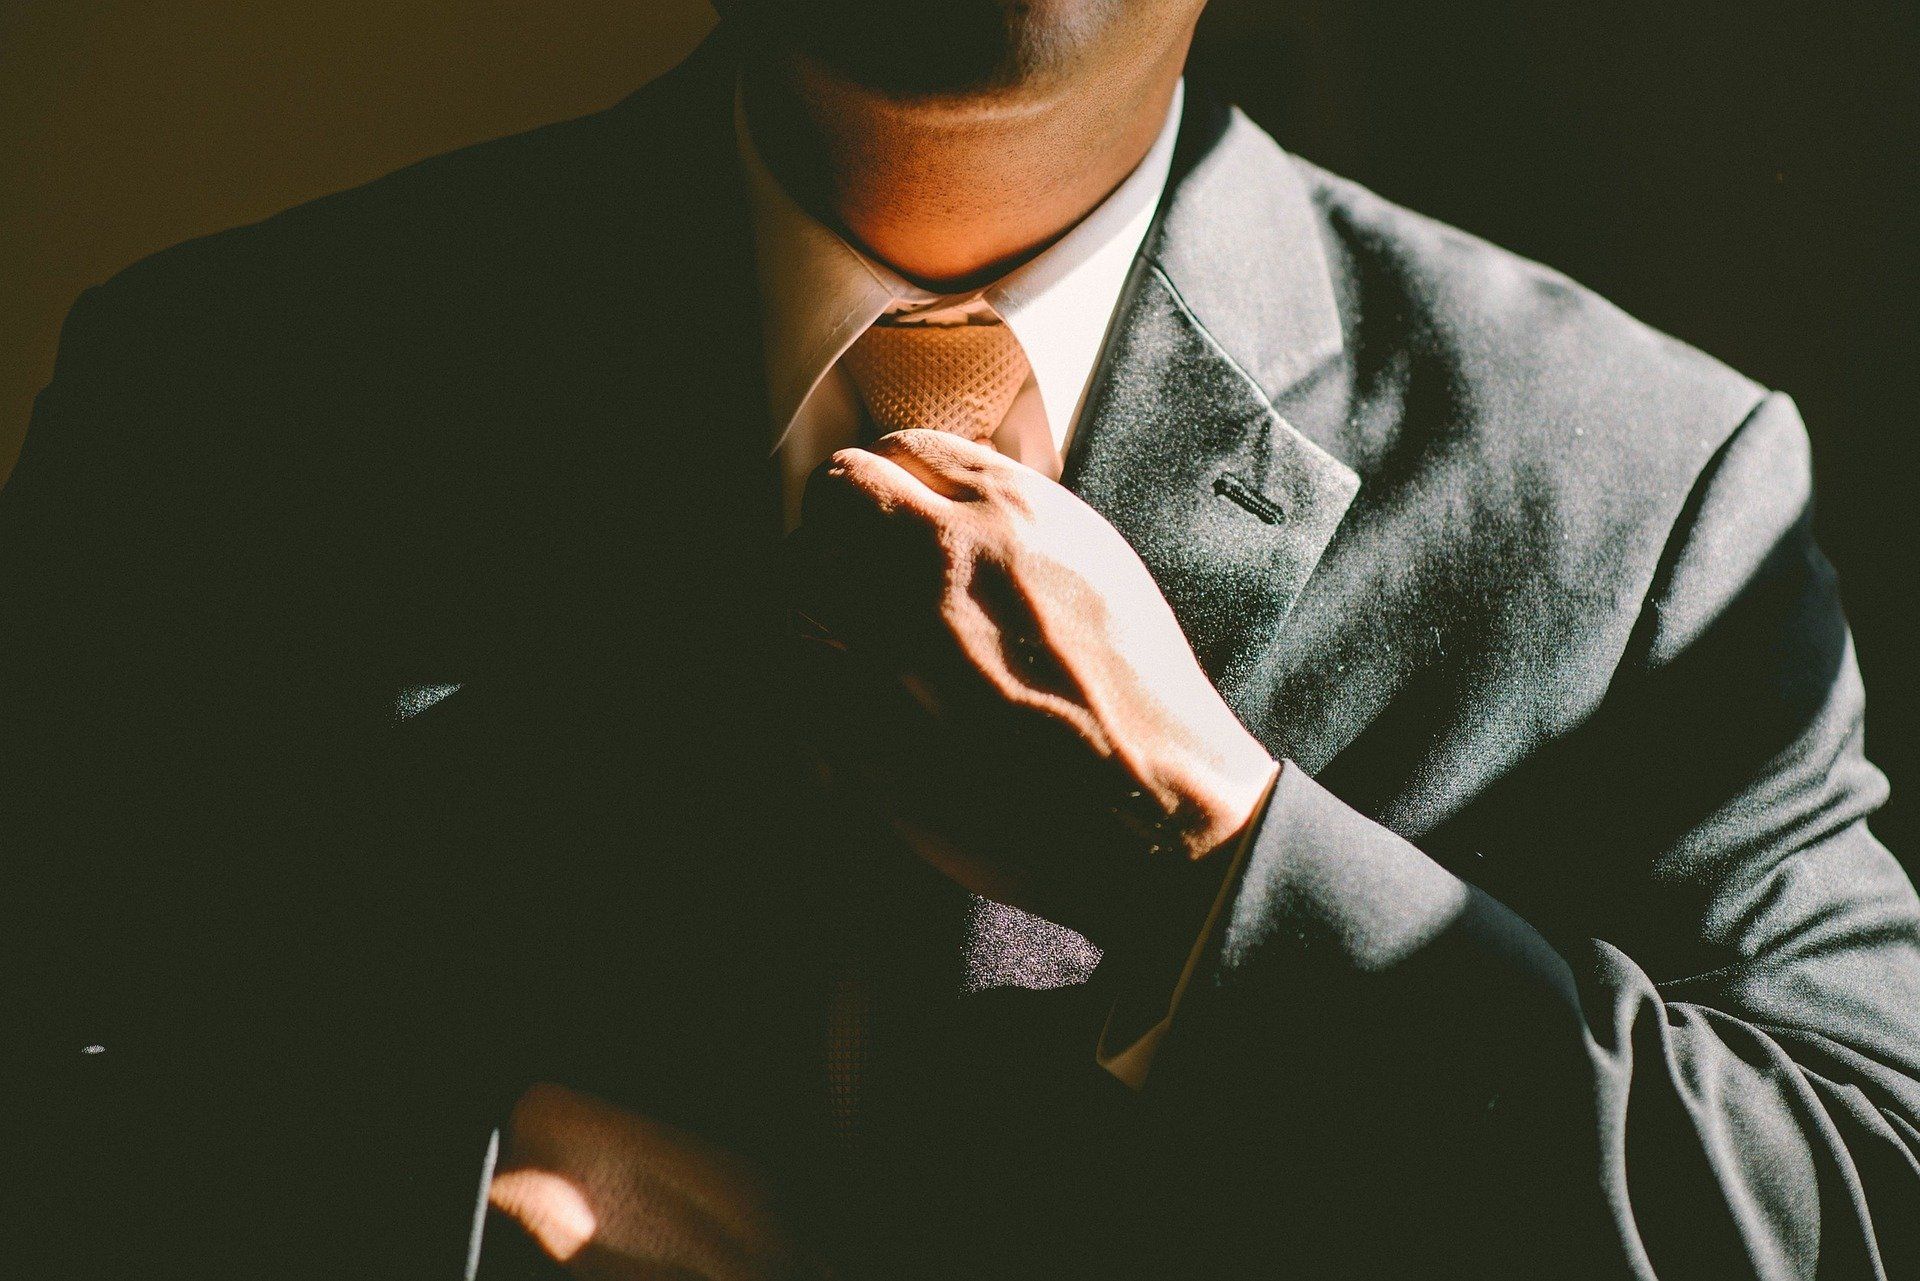 a man wearing a suit & tie